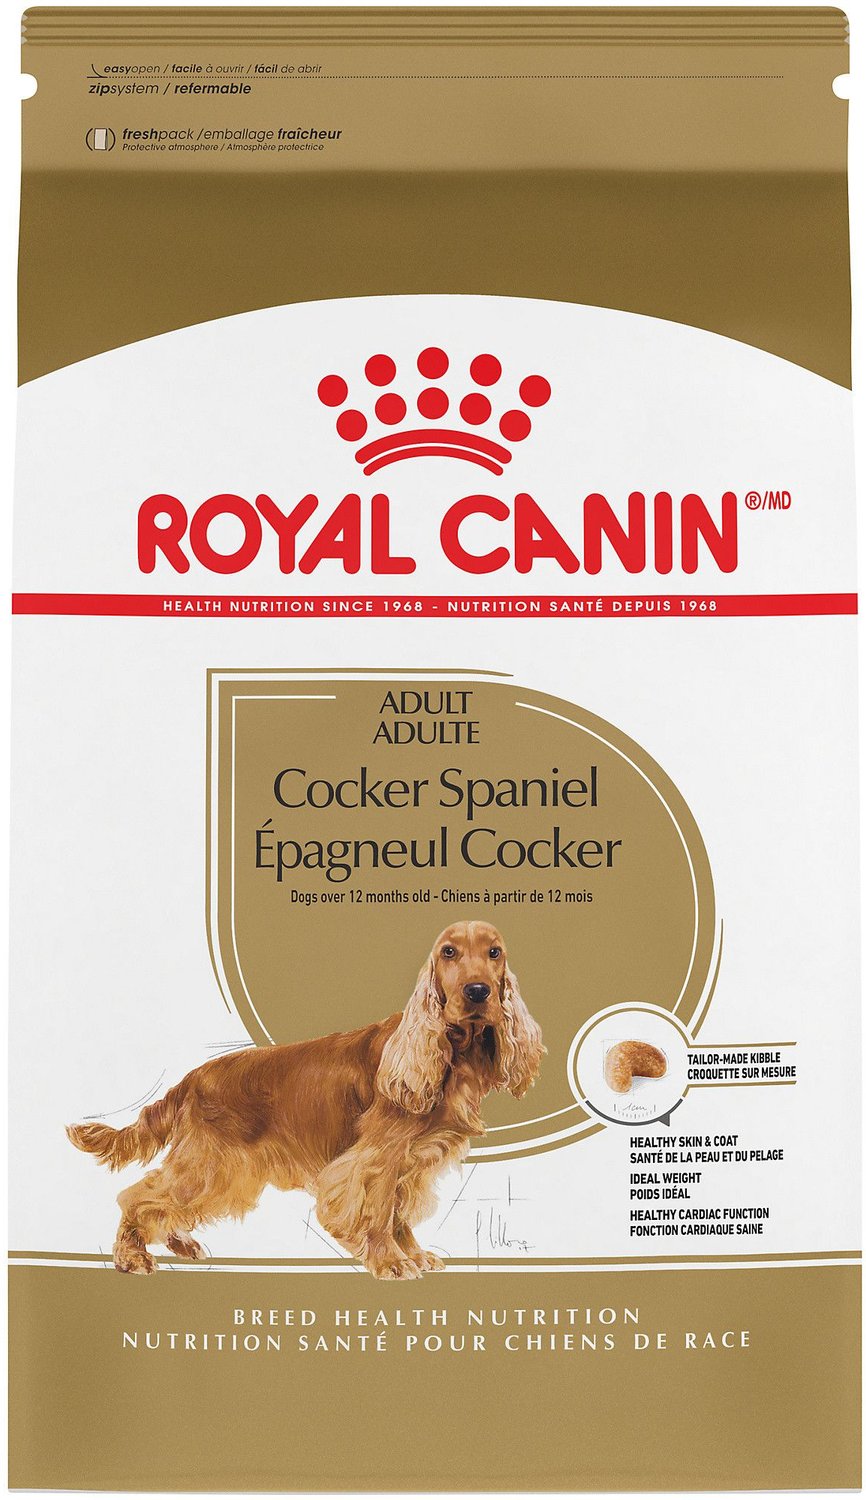 royal canin dog food for cocker spaniels